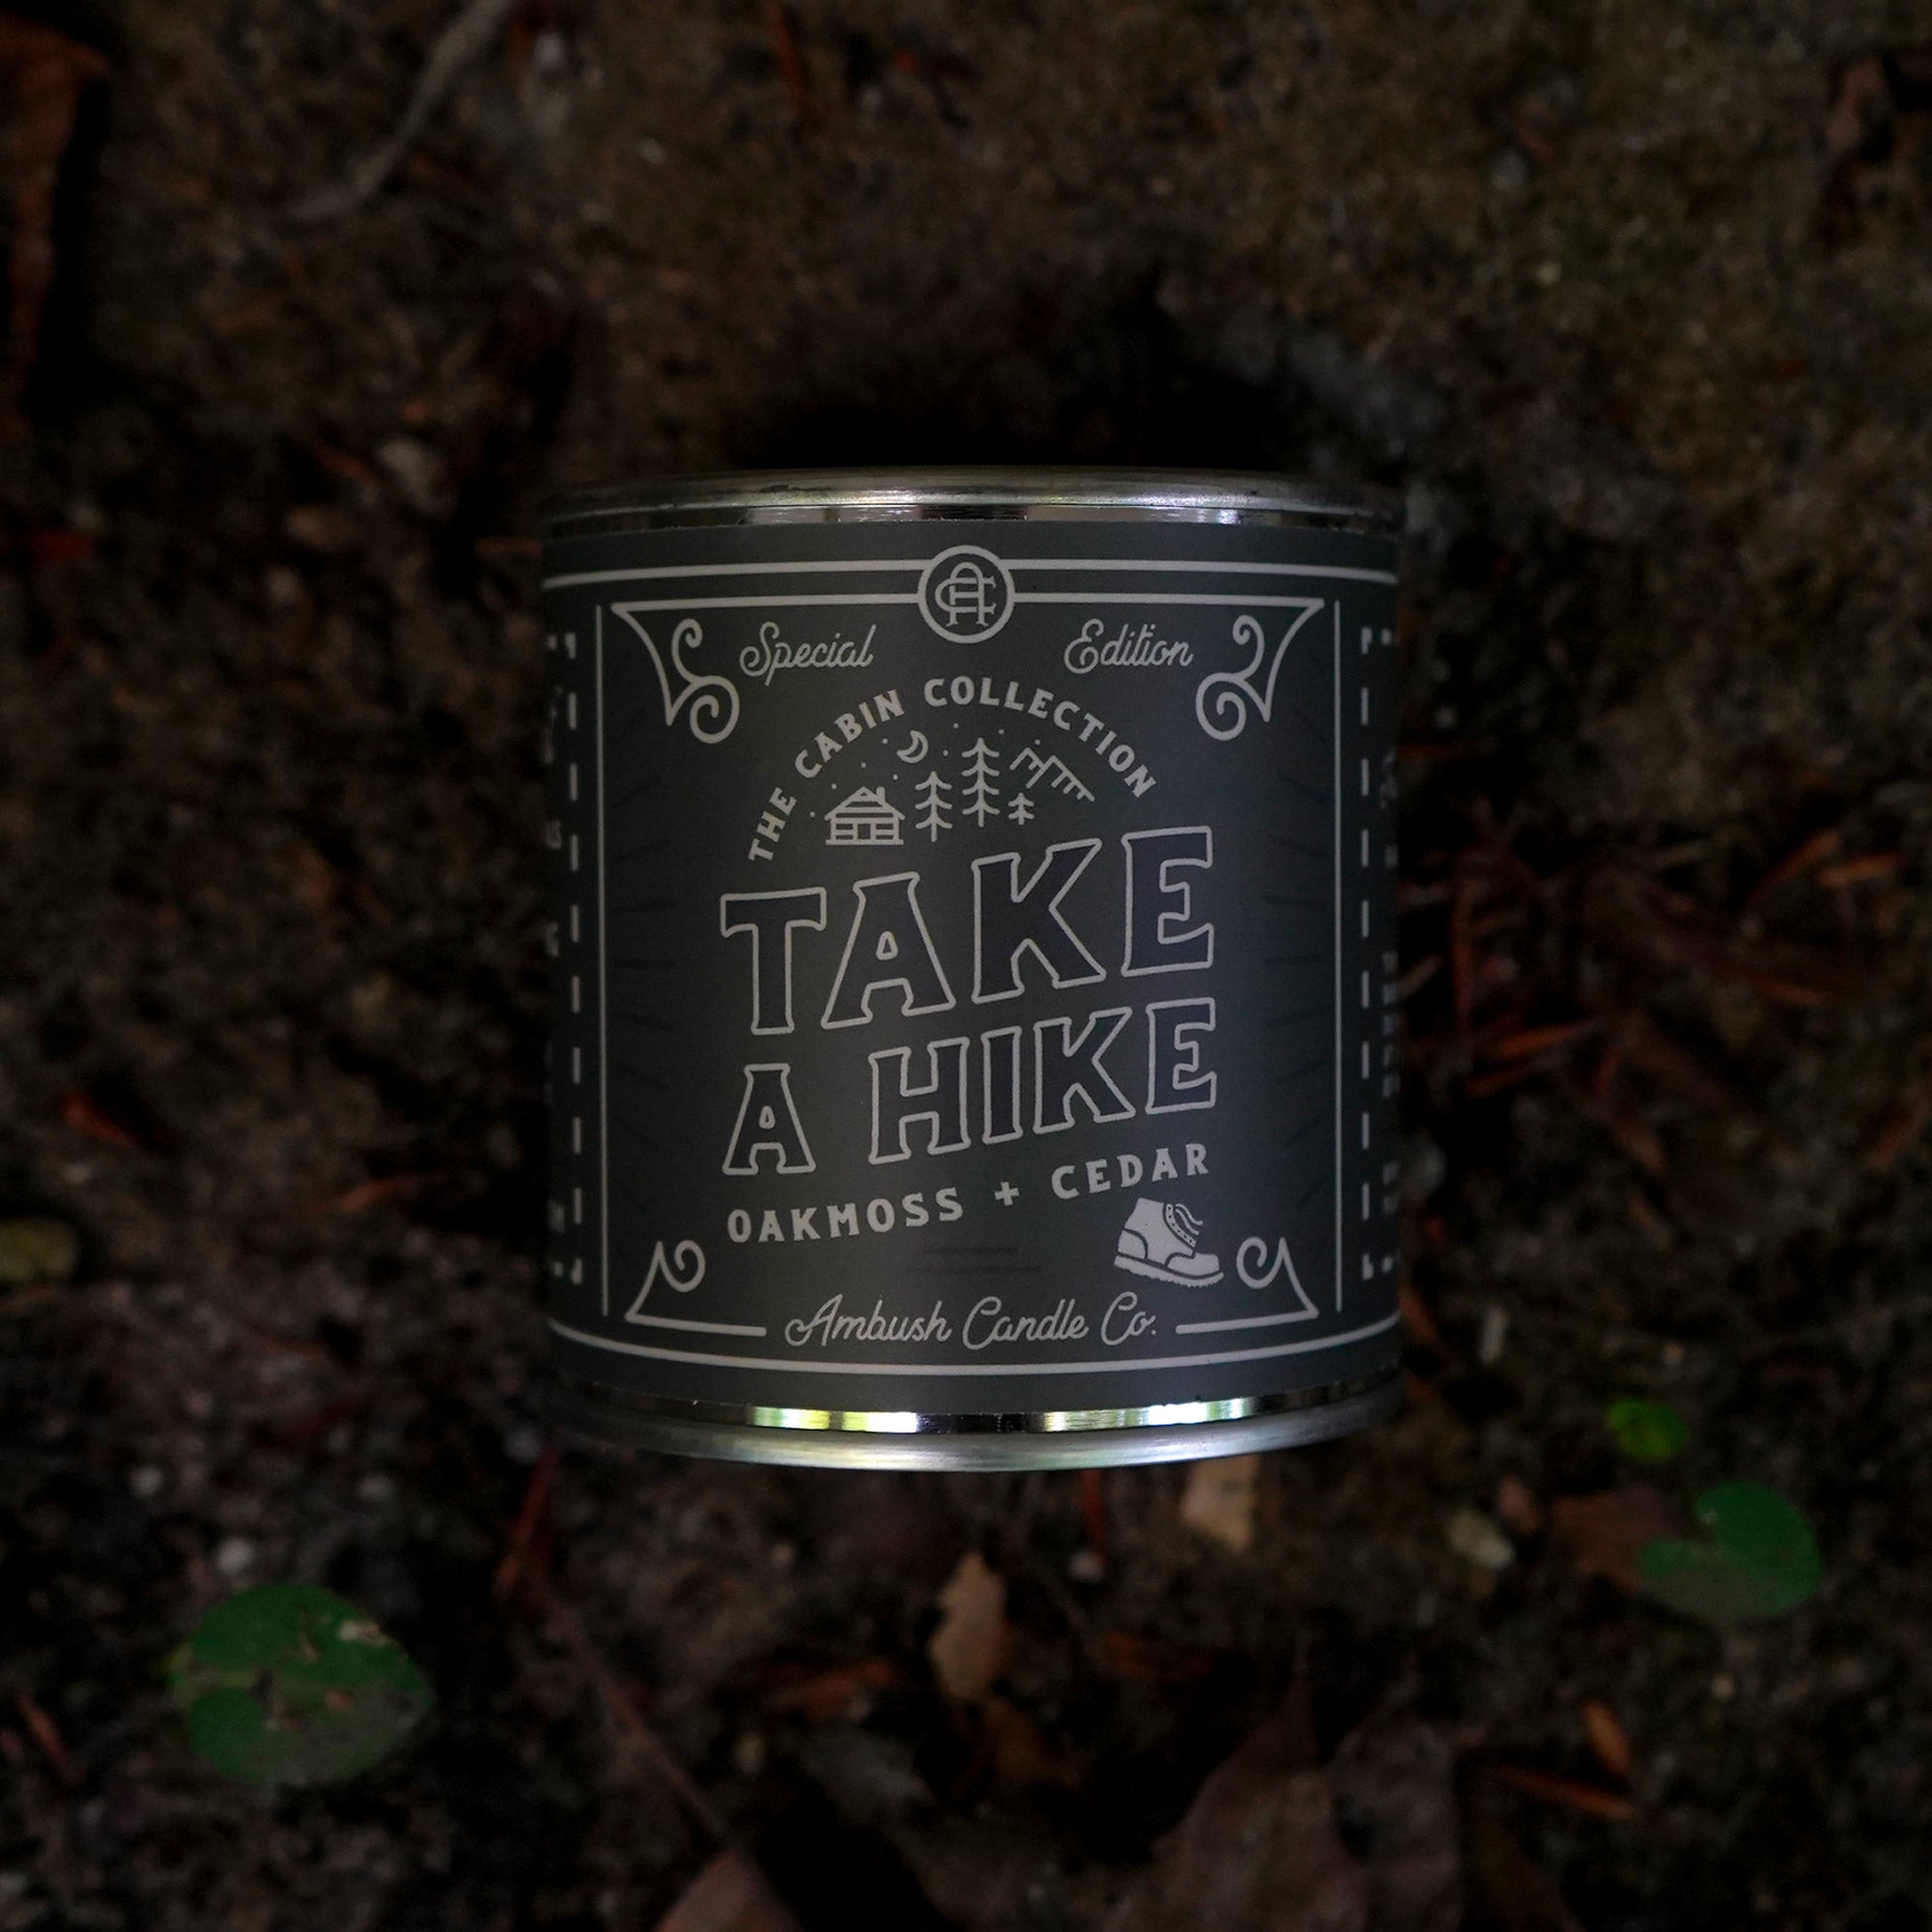 Ambush Candle Co. 8oz 'Take A Hike' Soy Candle - Oakmoss / Ceder